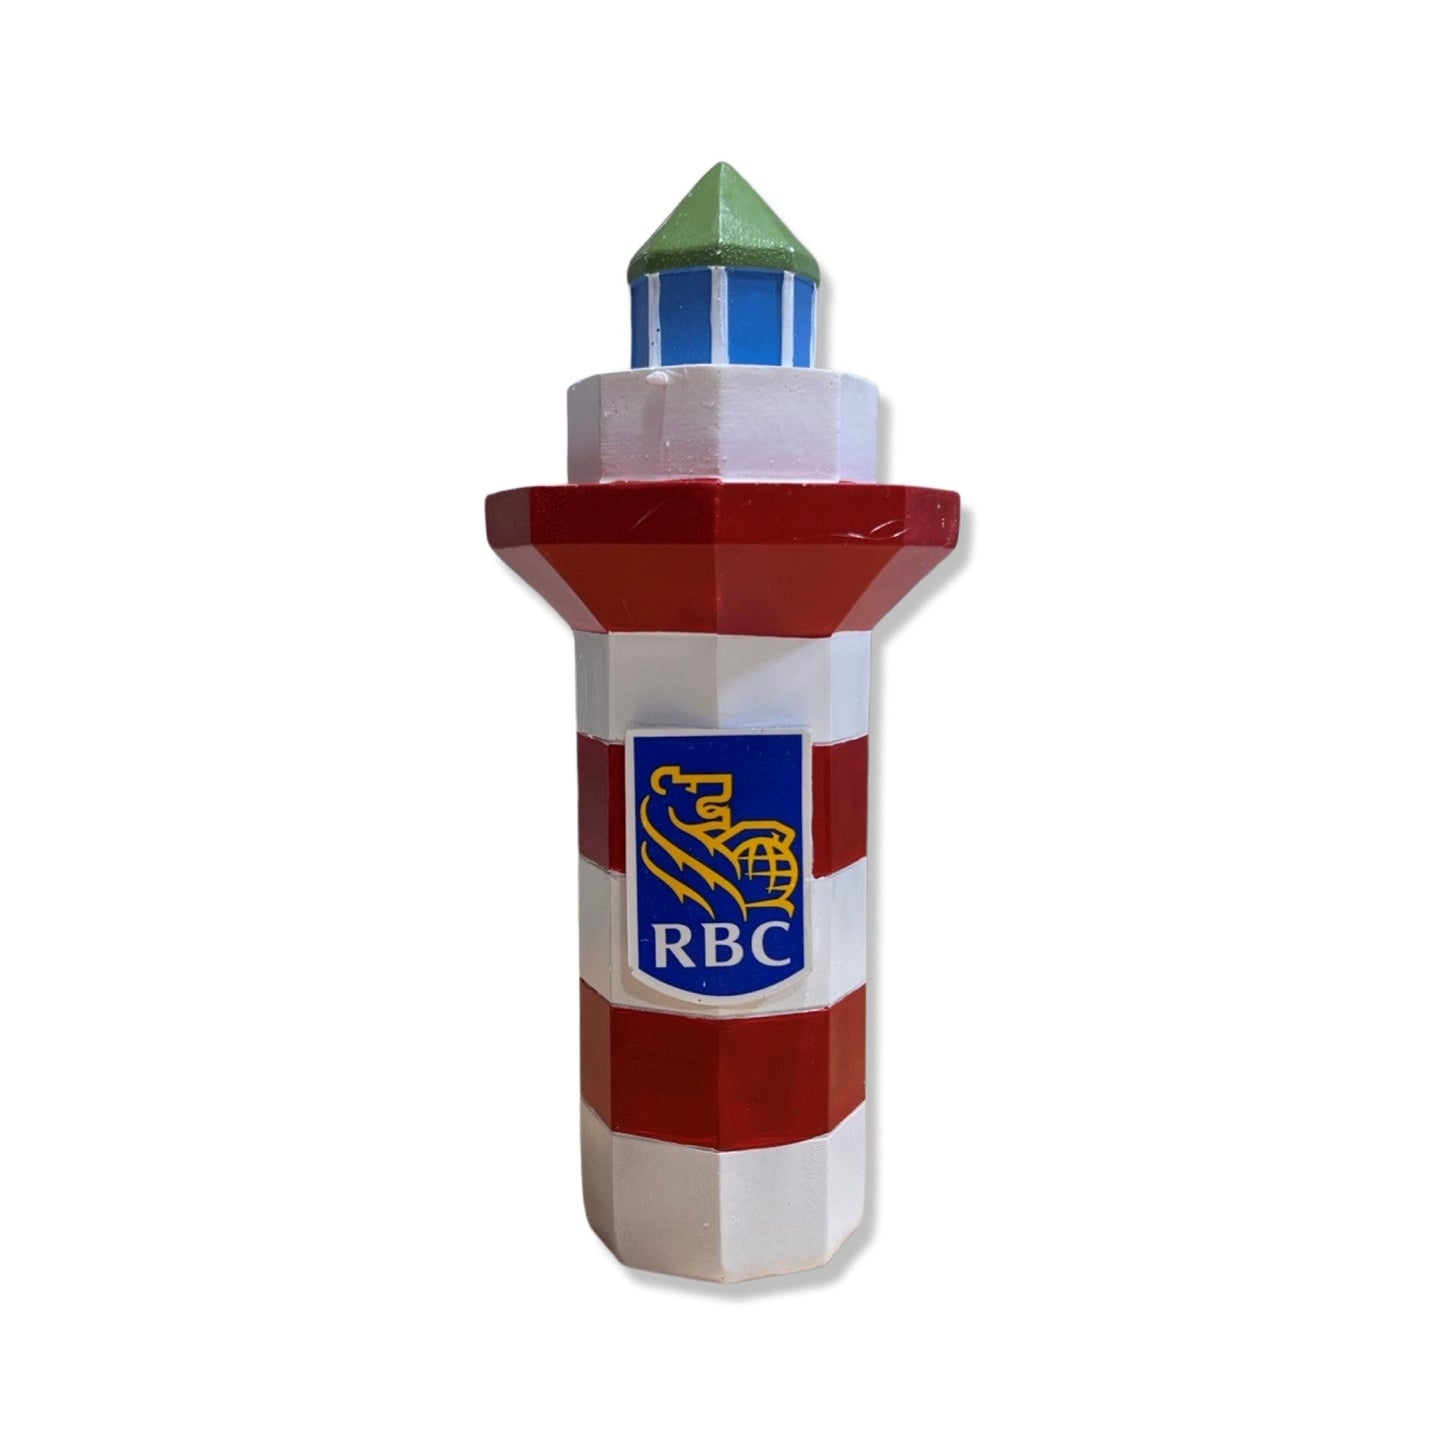 8" RBC Heritage Lighthouse